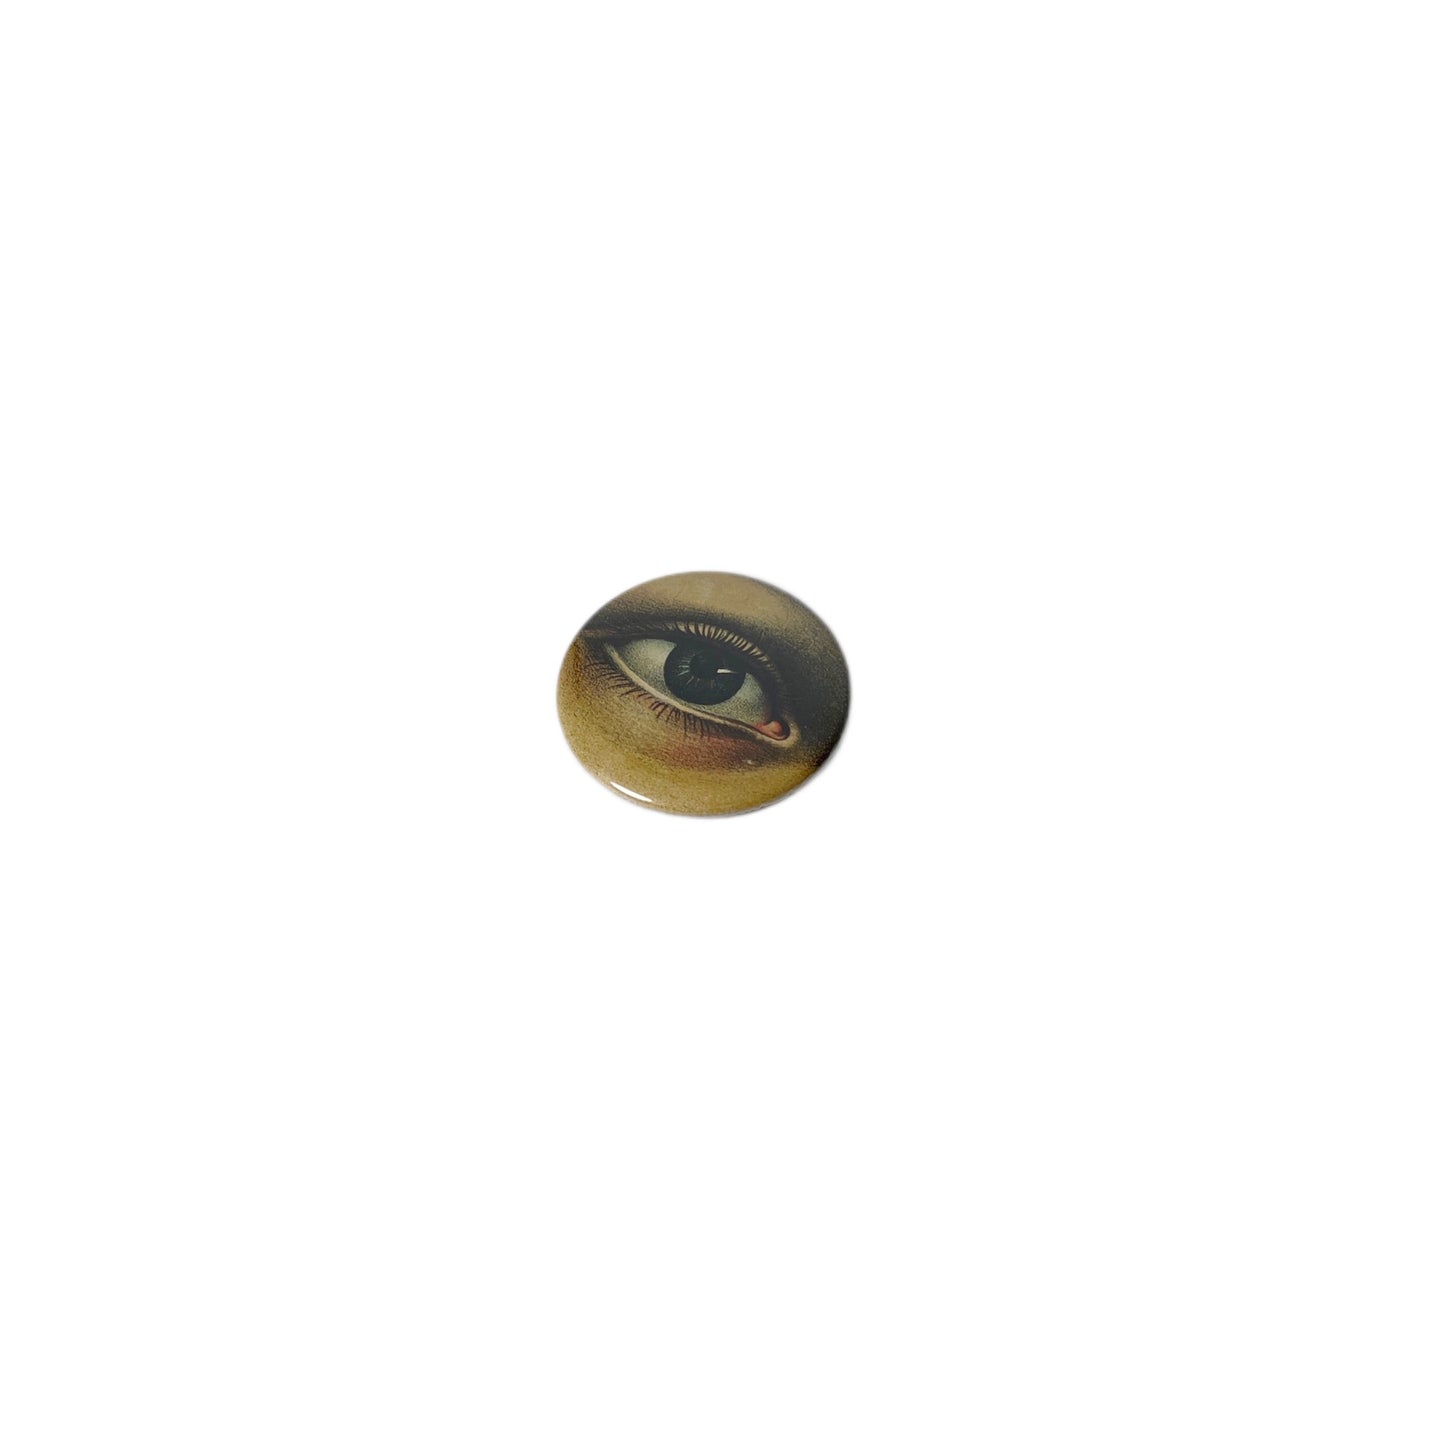 【JOHN DERIAN】ポケットミラー Eye